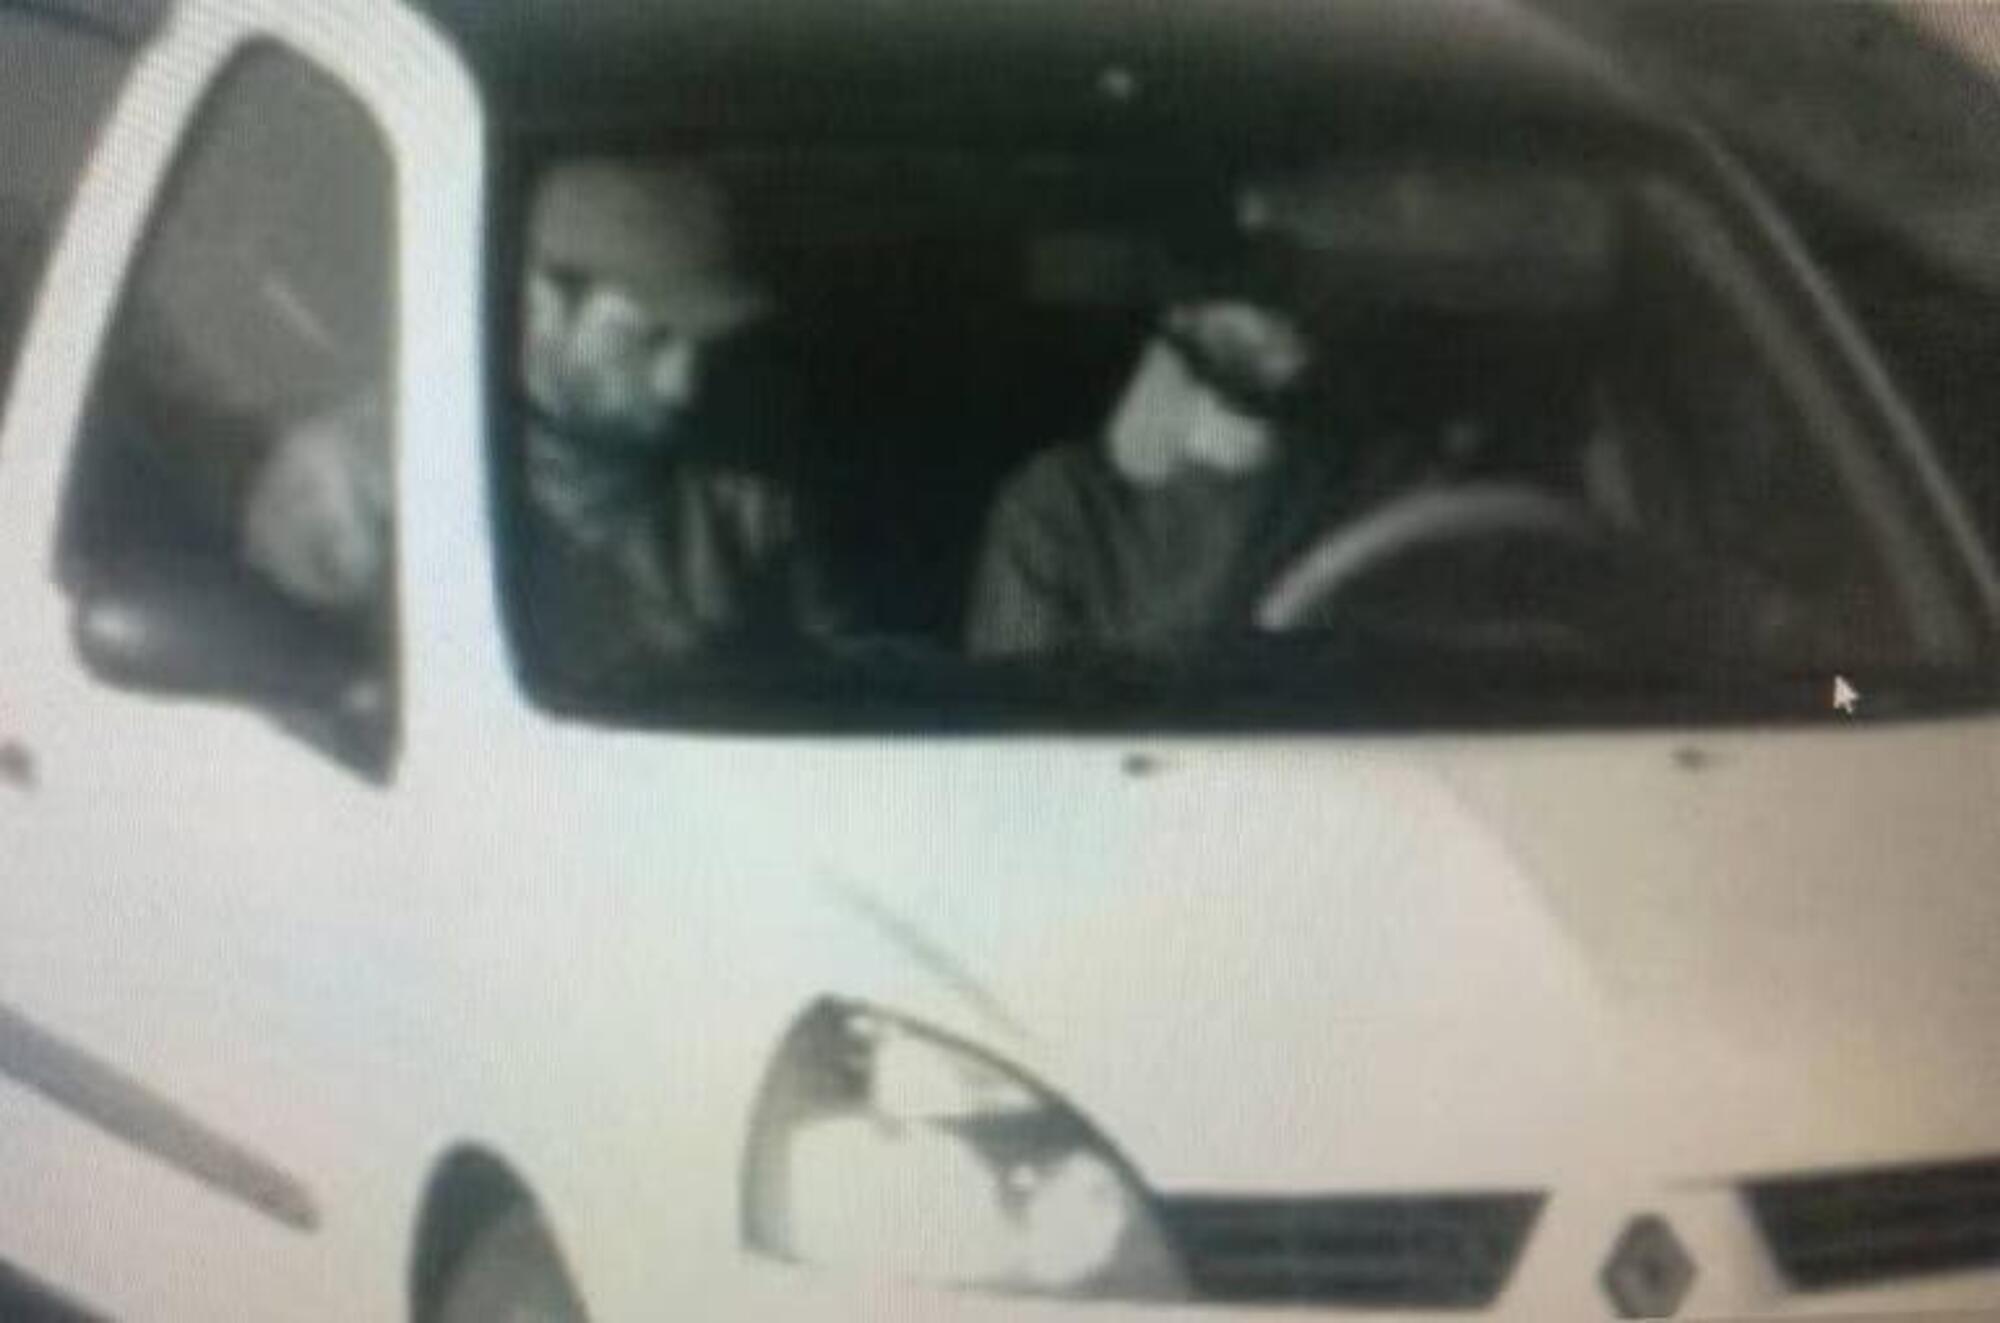 I due terroristi nella Renault Symbol bianca durante la fuga dal Crocus